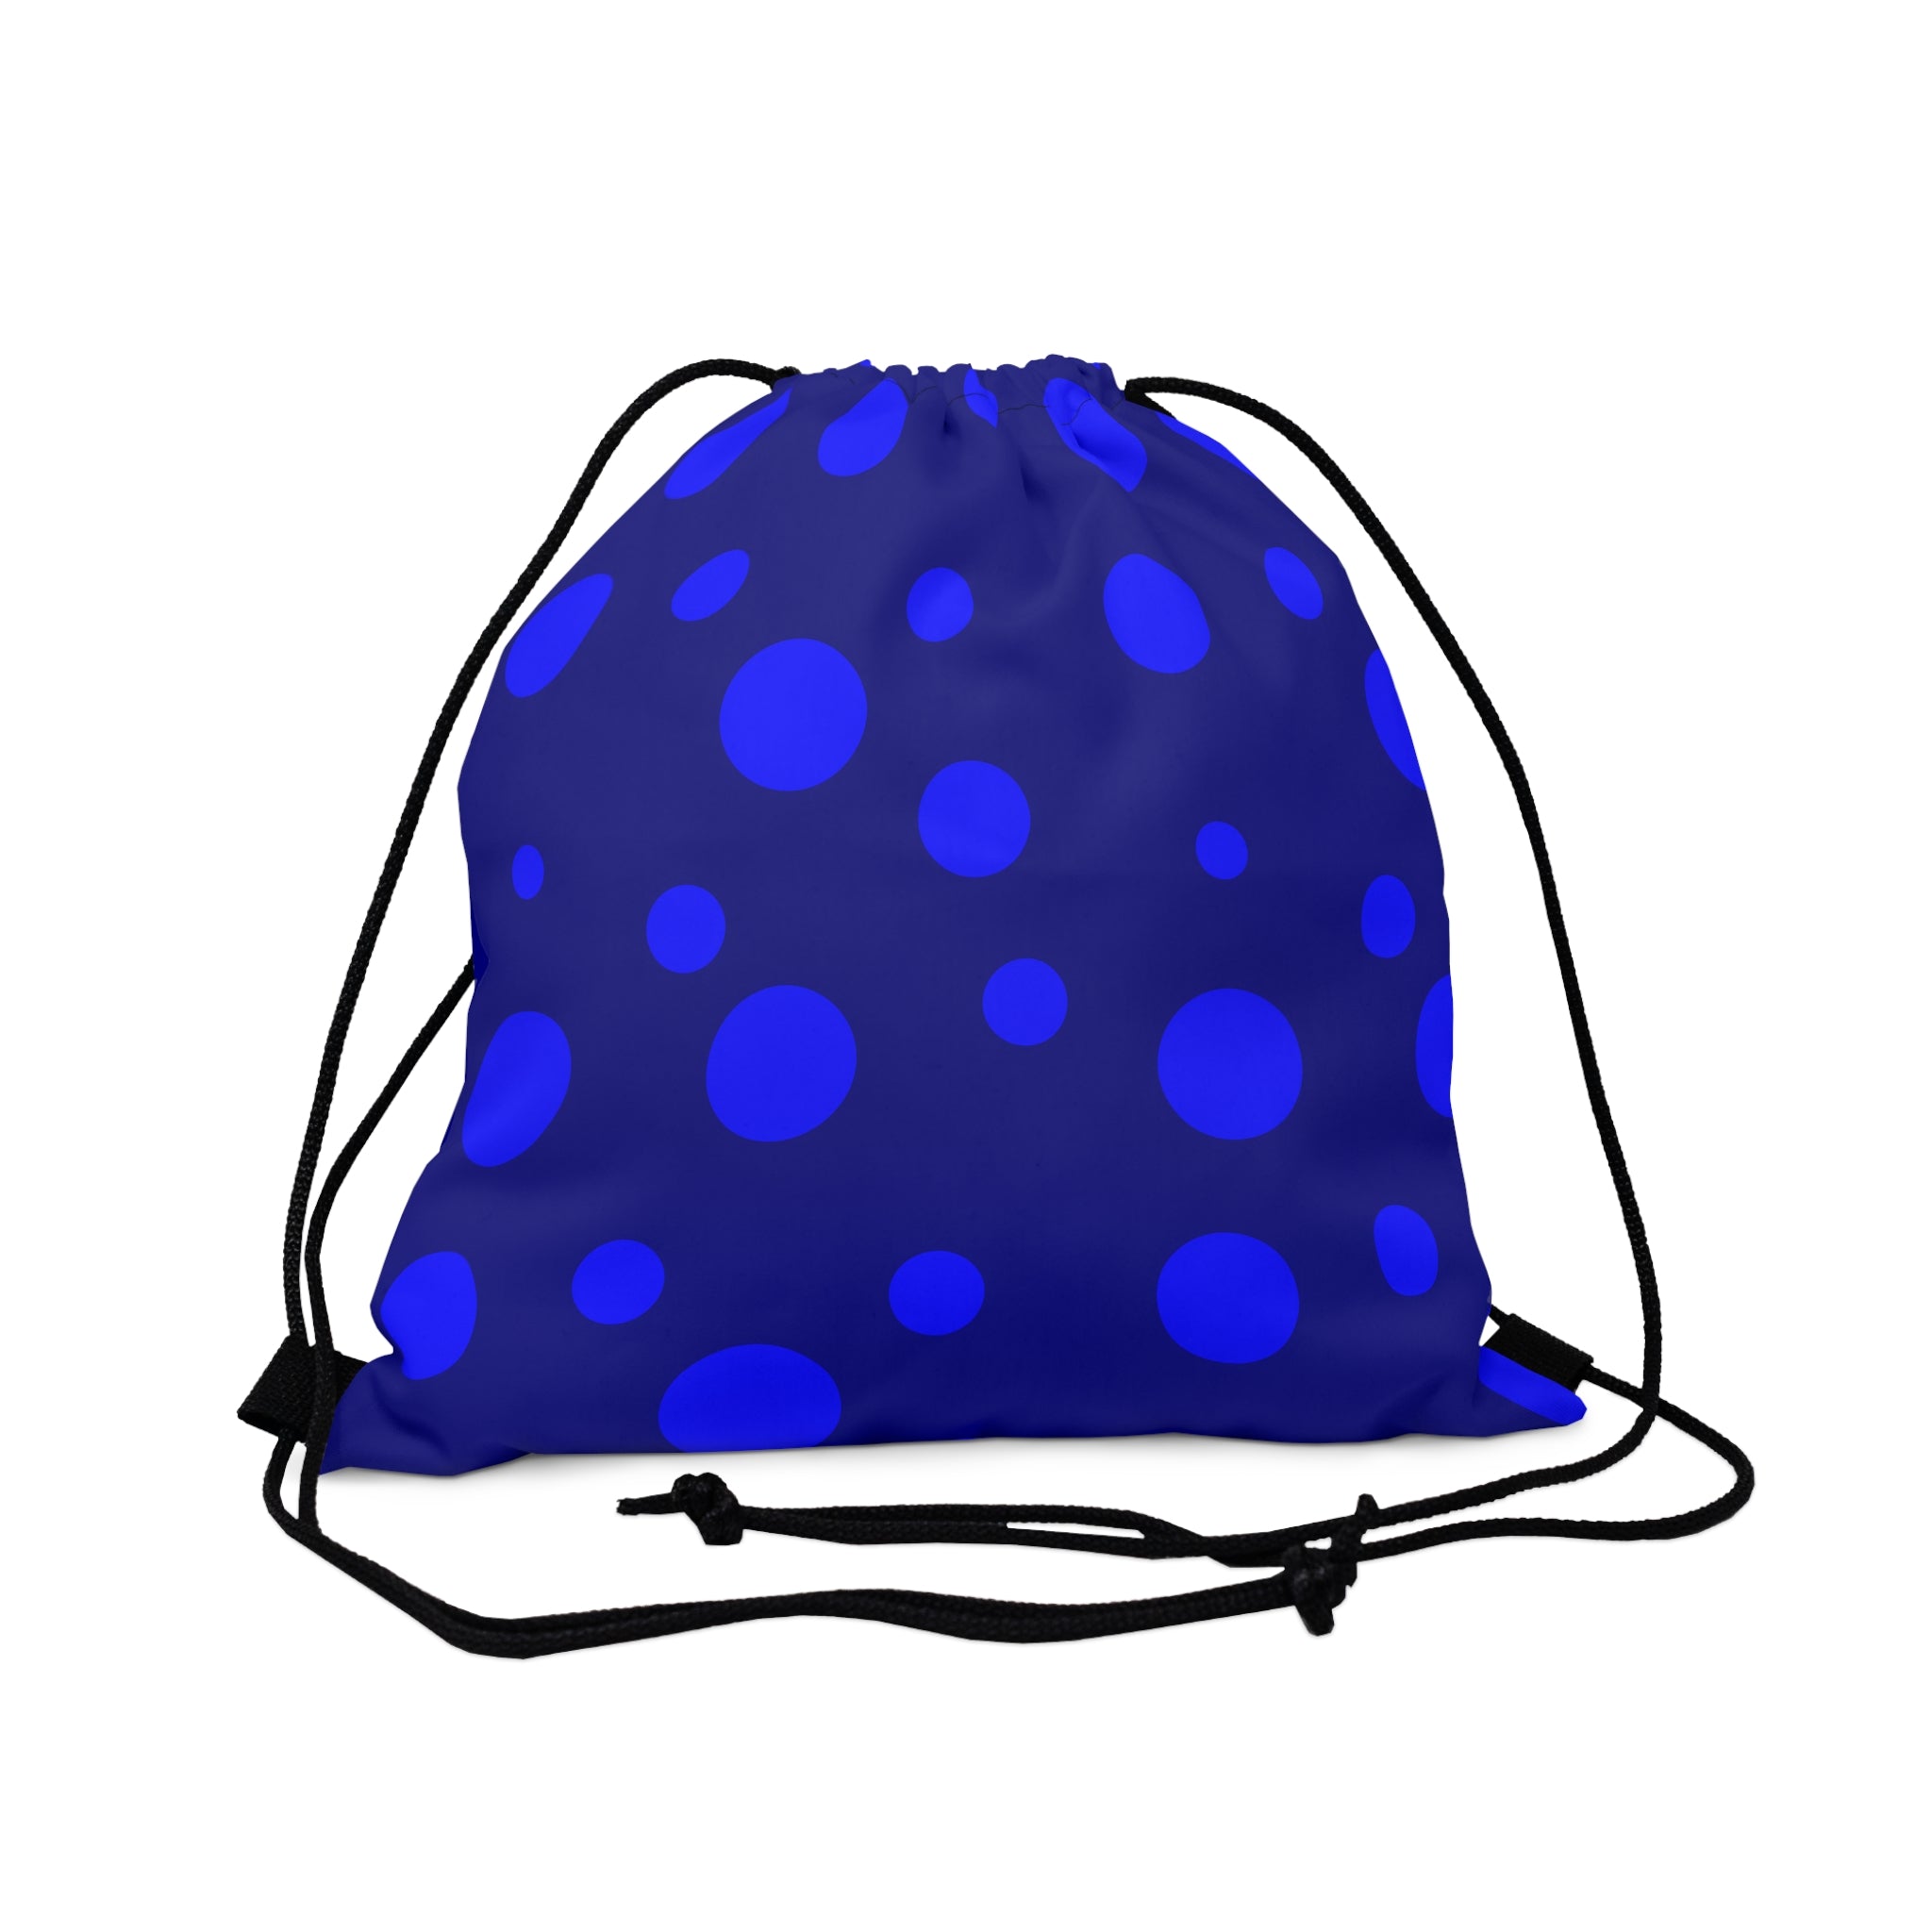 dark blue drawstring bag with lighter blue polka dots